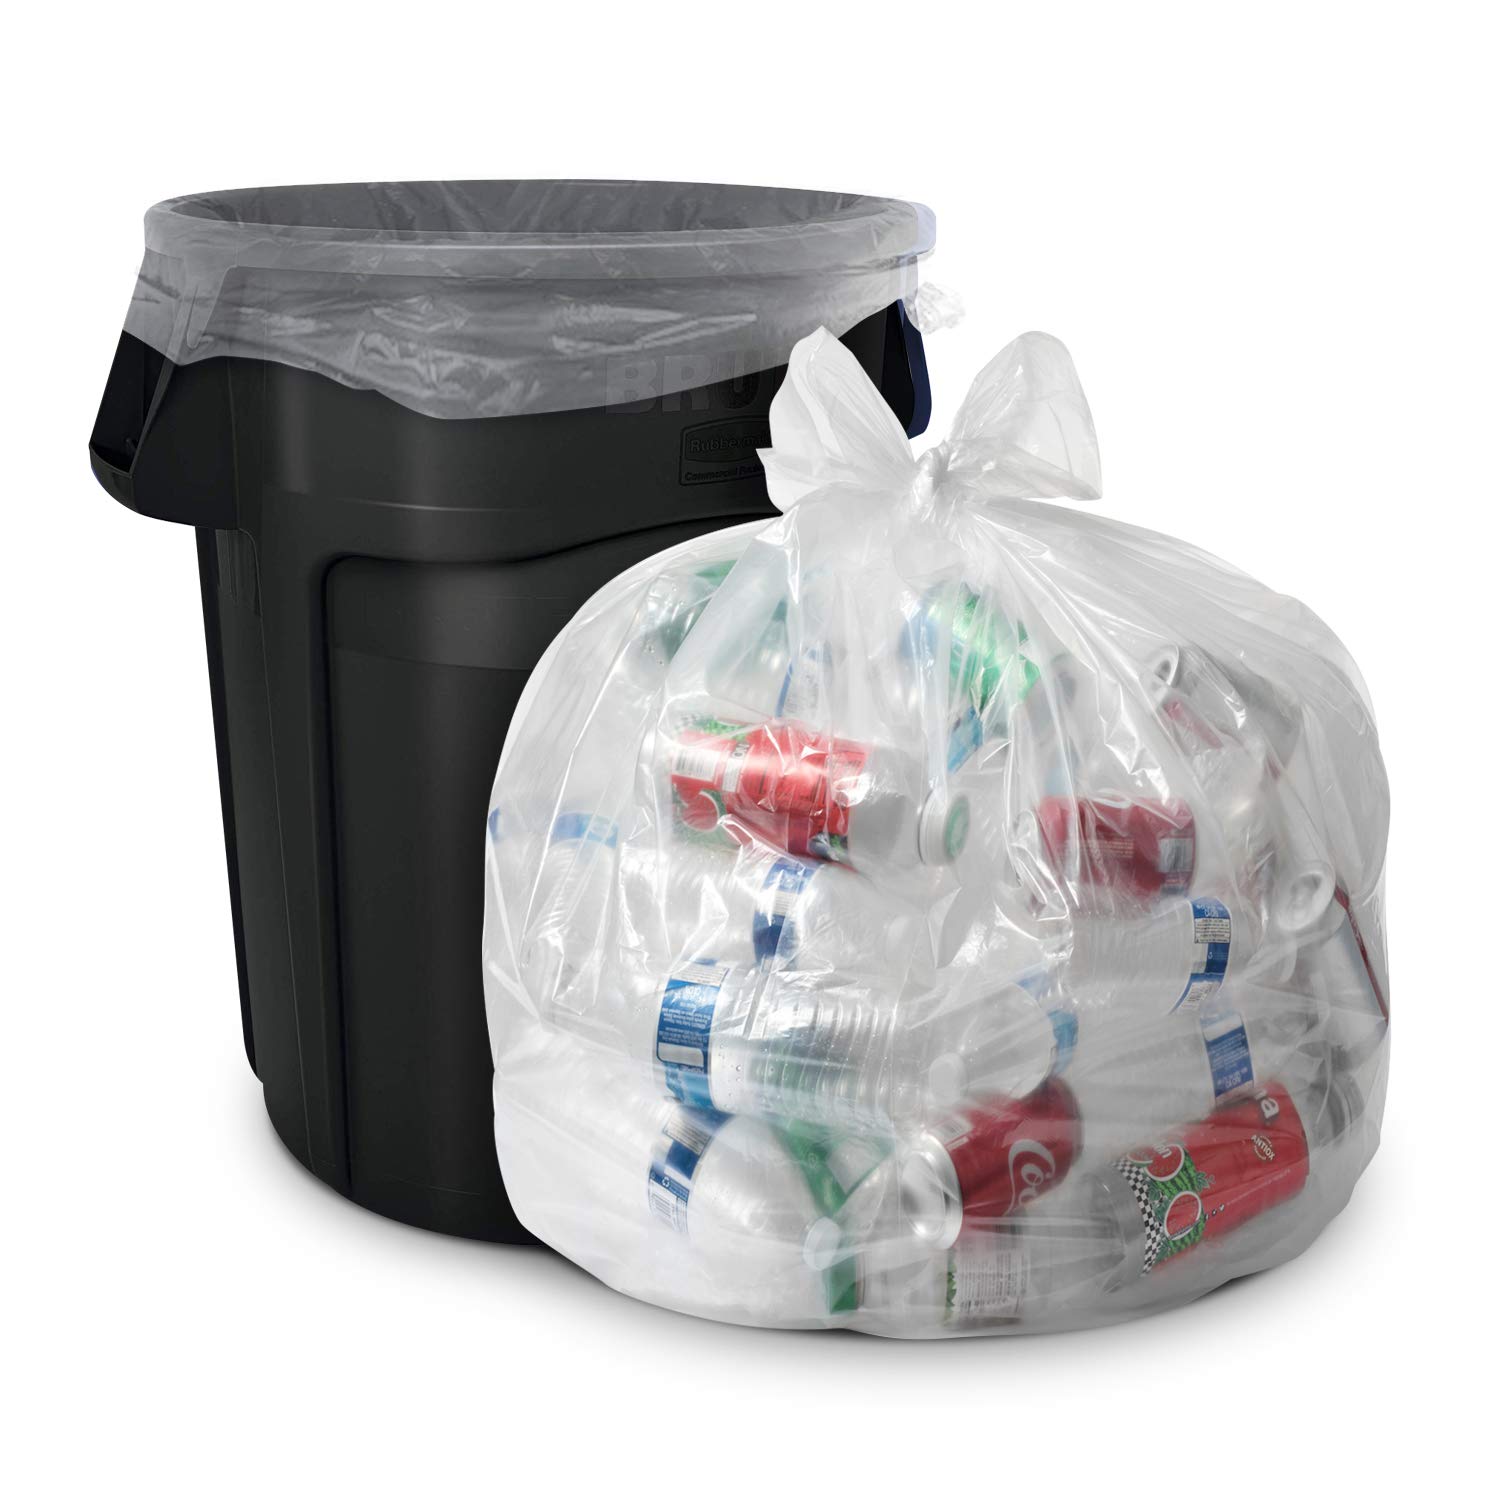 Aluf Plastics Trash & Recycling at Lowes.com